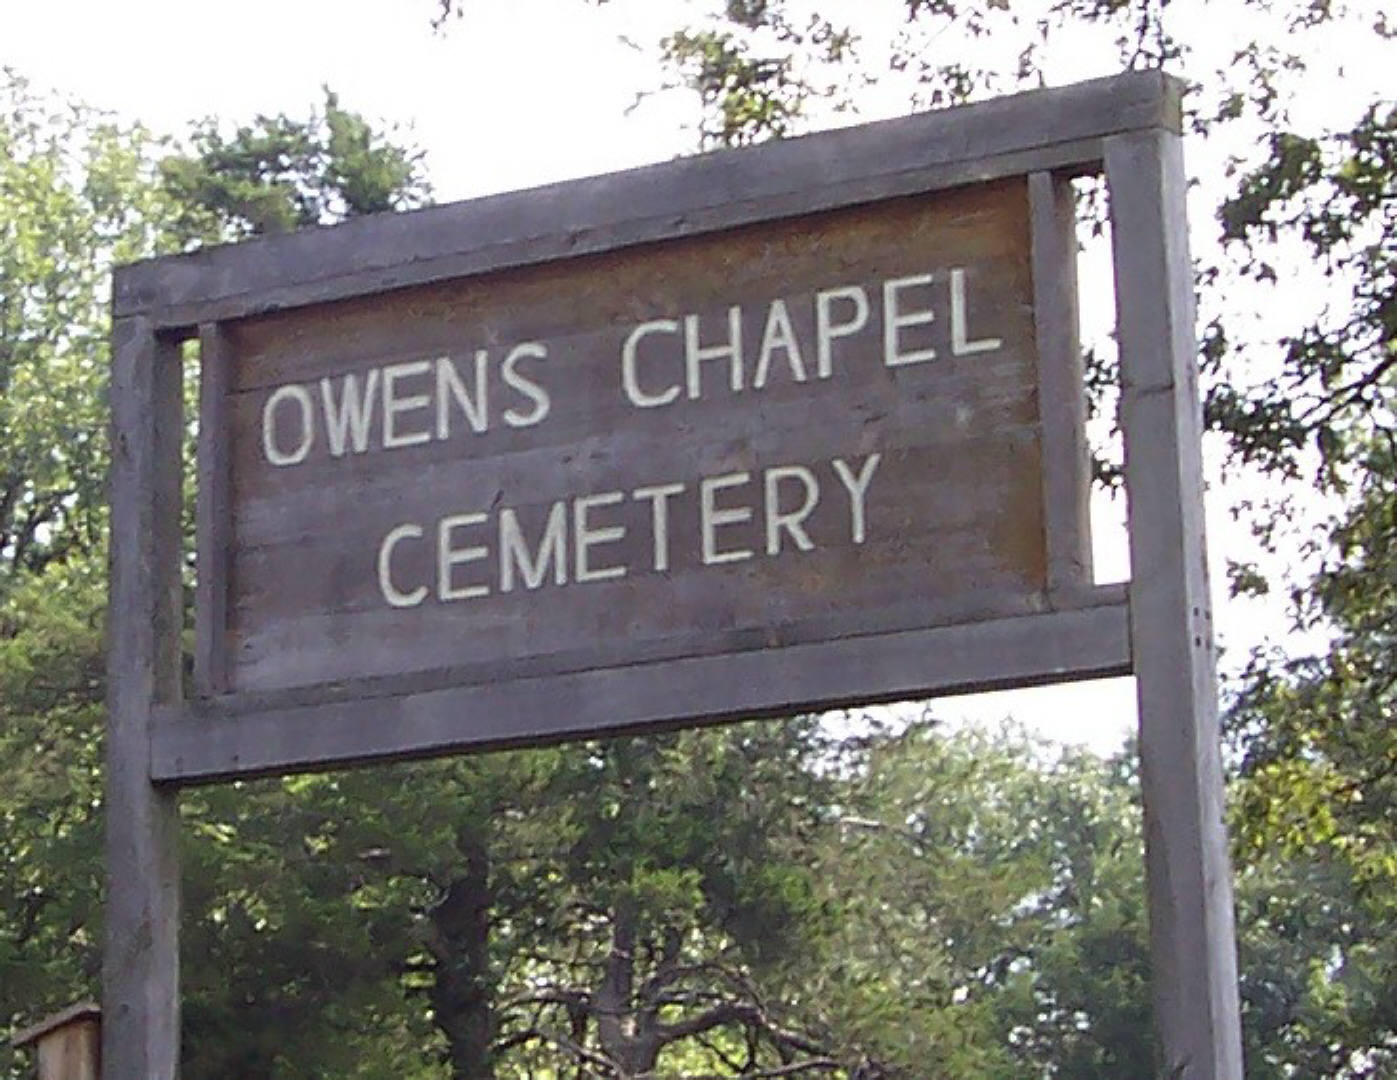 Owens Chapel Cemetery